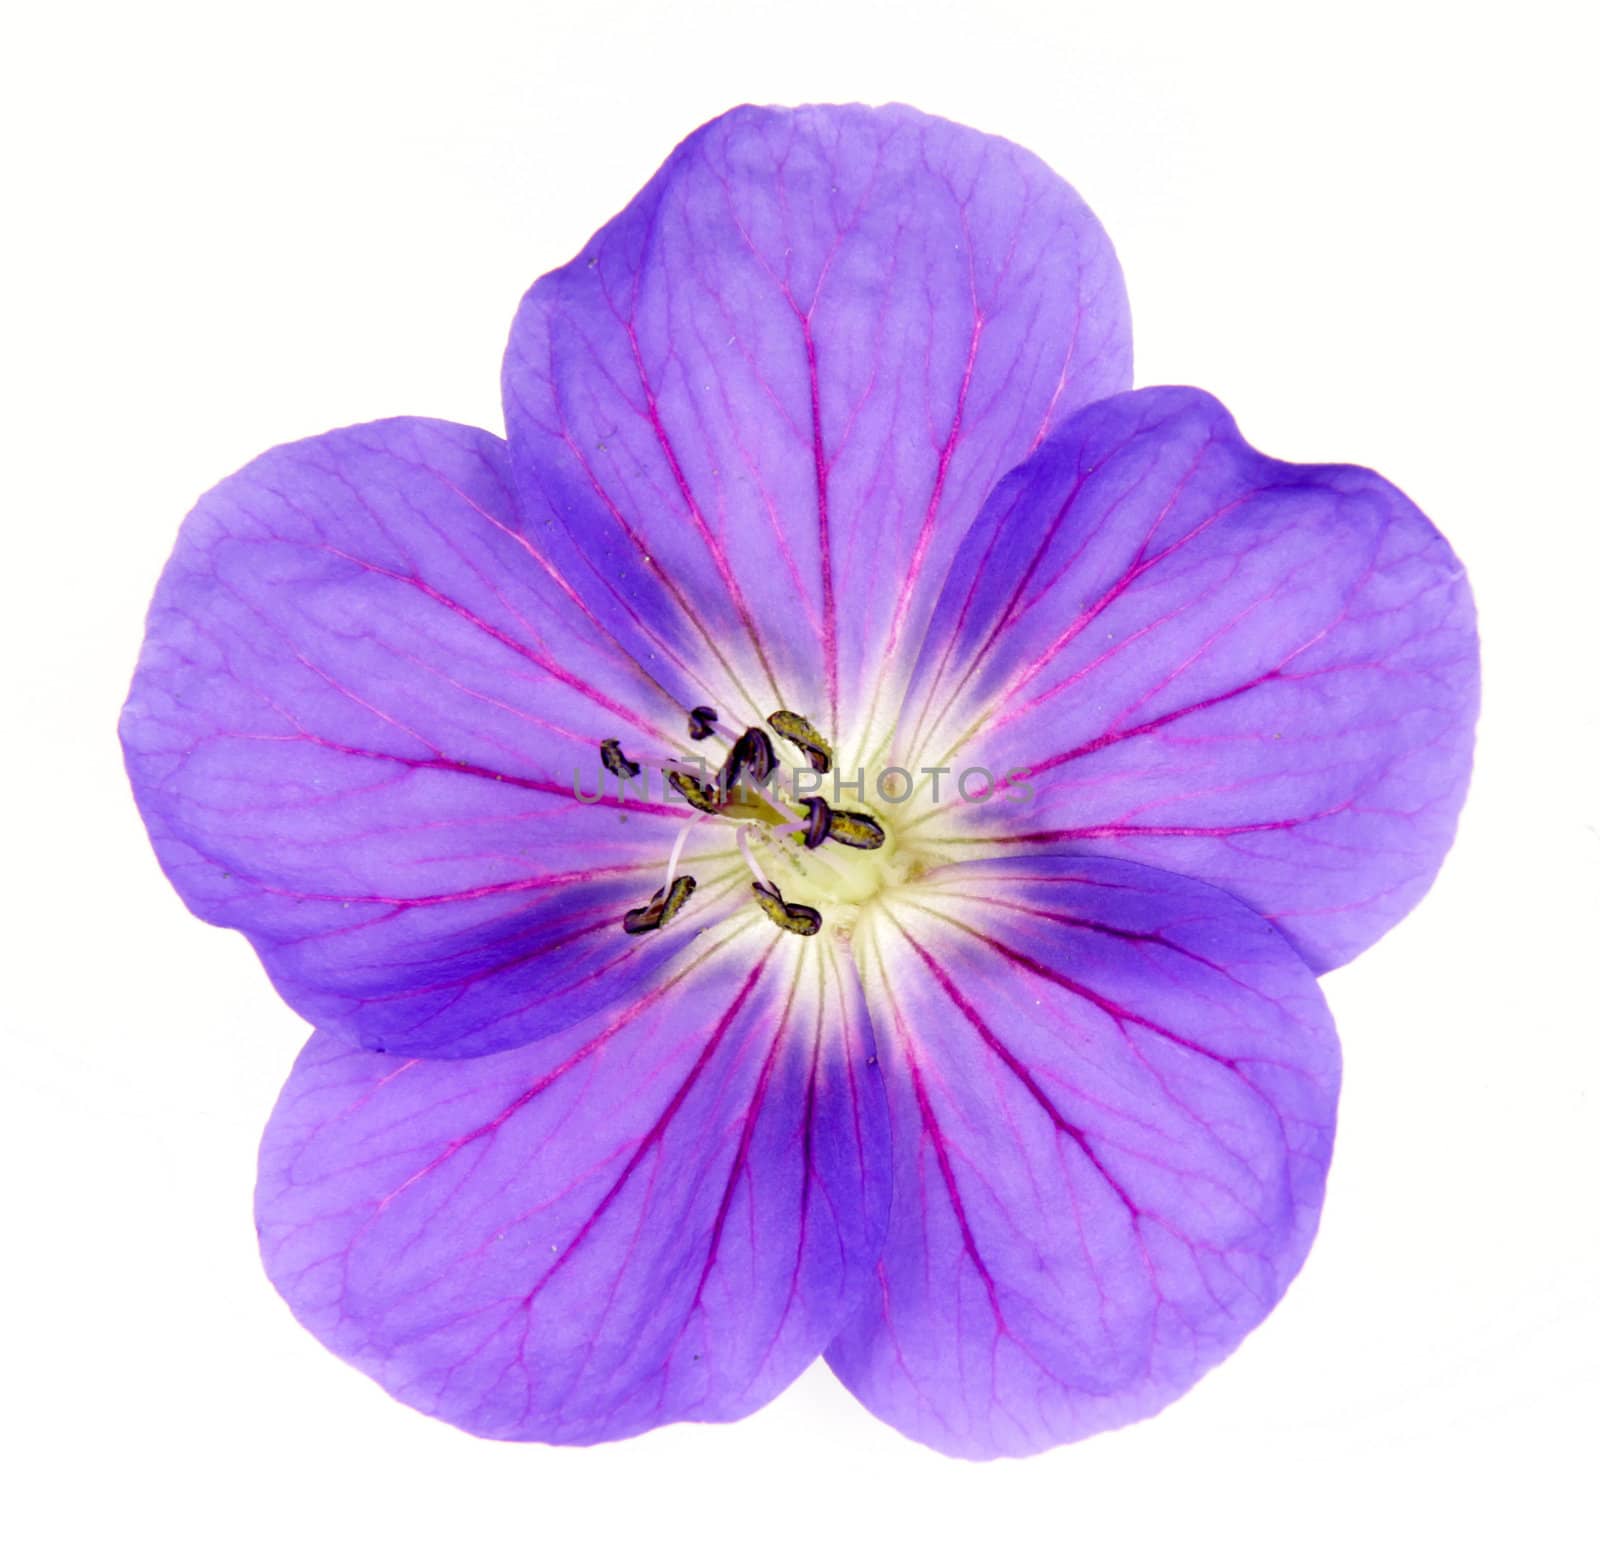 A close-up of a purple Crane's Bill flower.